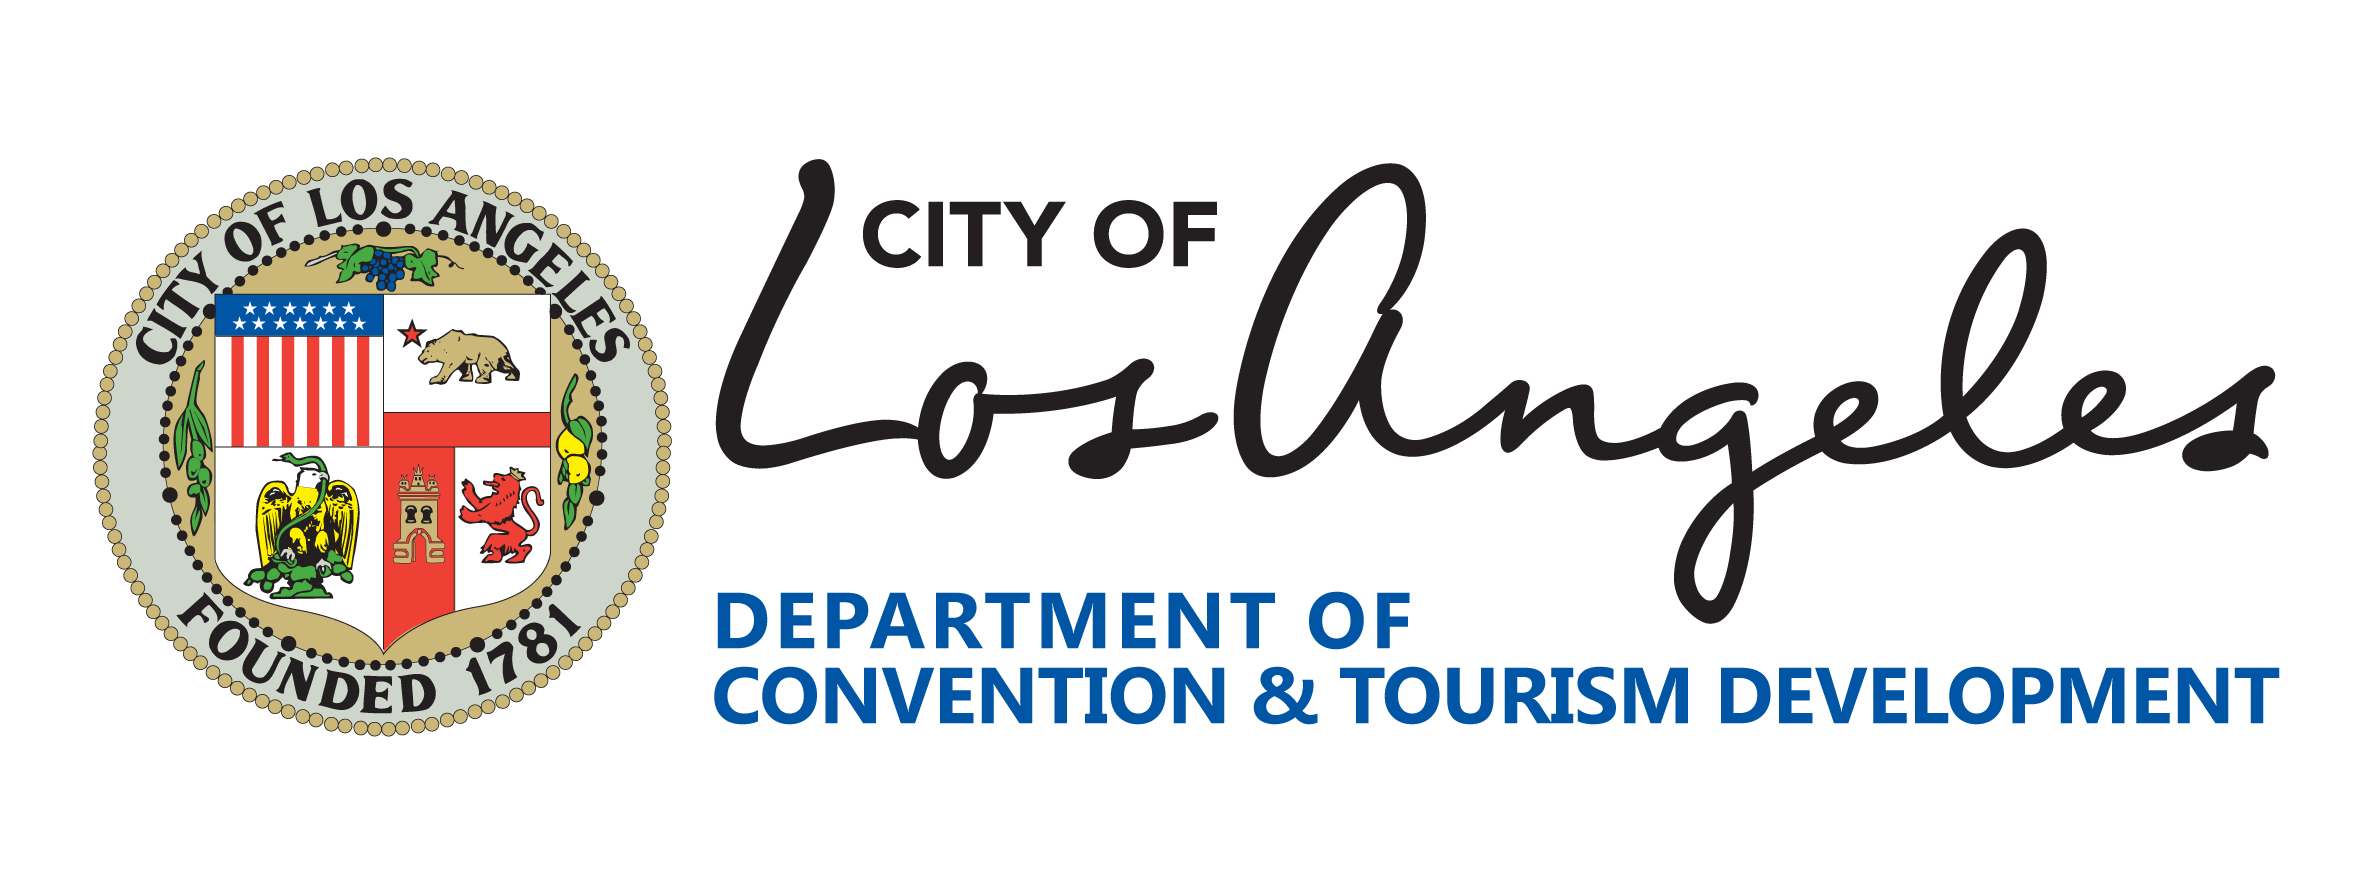 Los Angeles Logo - Department of Convention & Tourism Development